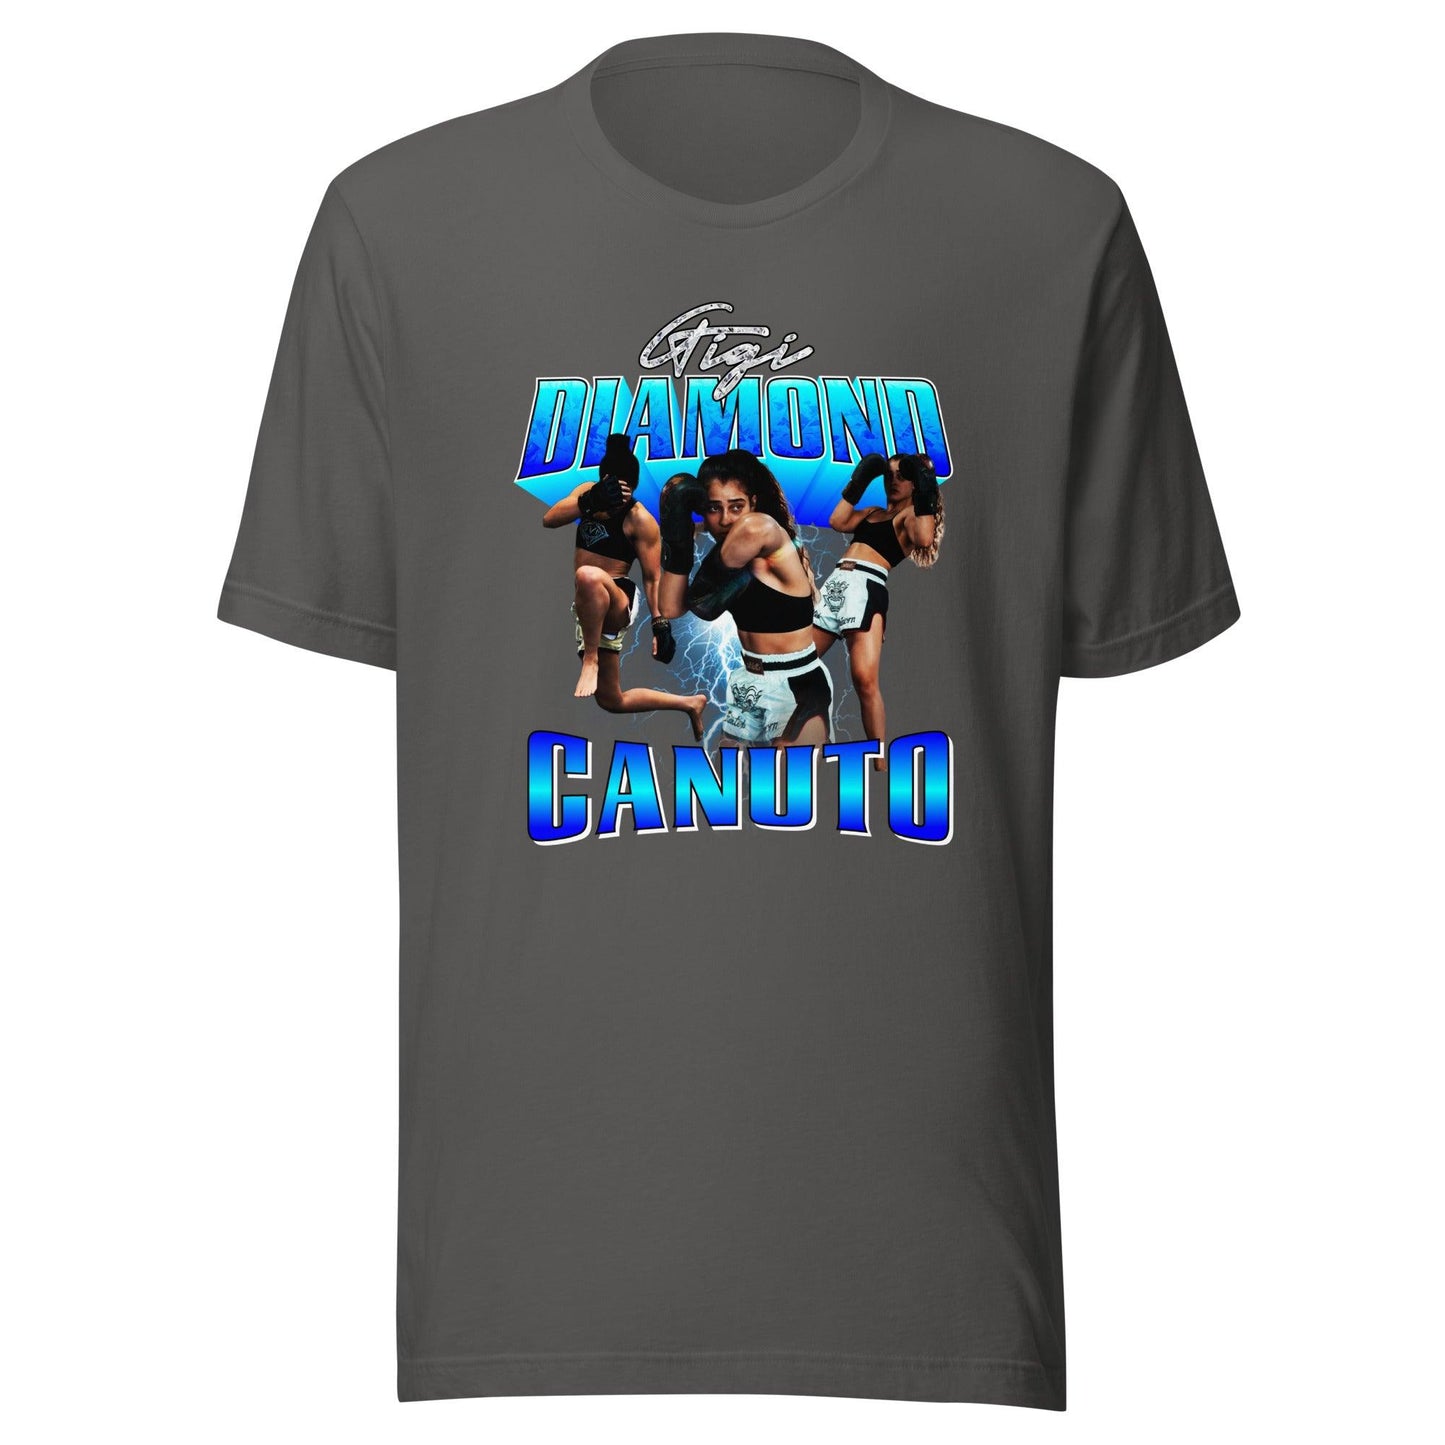 Giovanna Canuto "Fight Week" t-shirt - Fan Arch